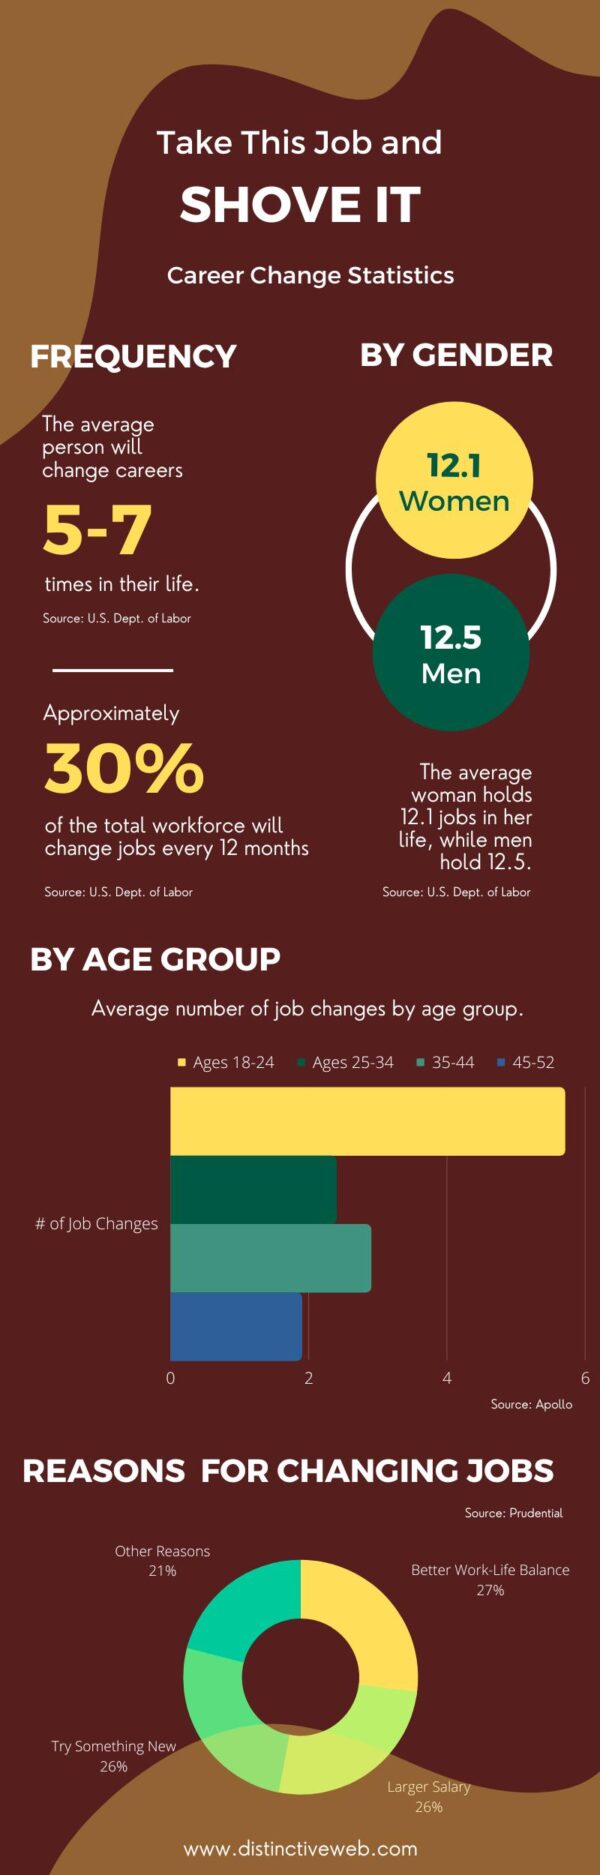 Career Change Statistics Infographic